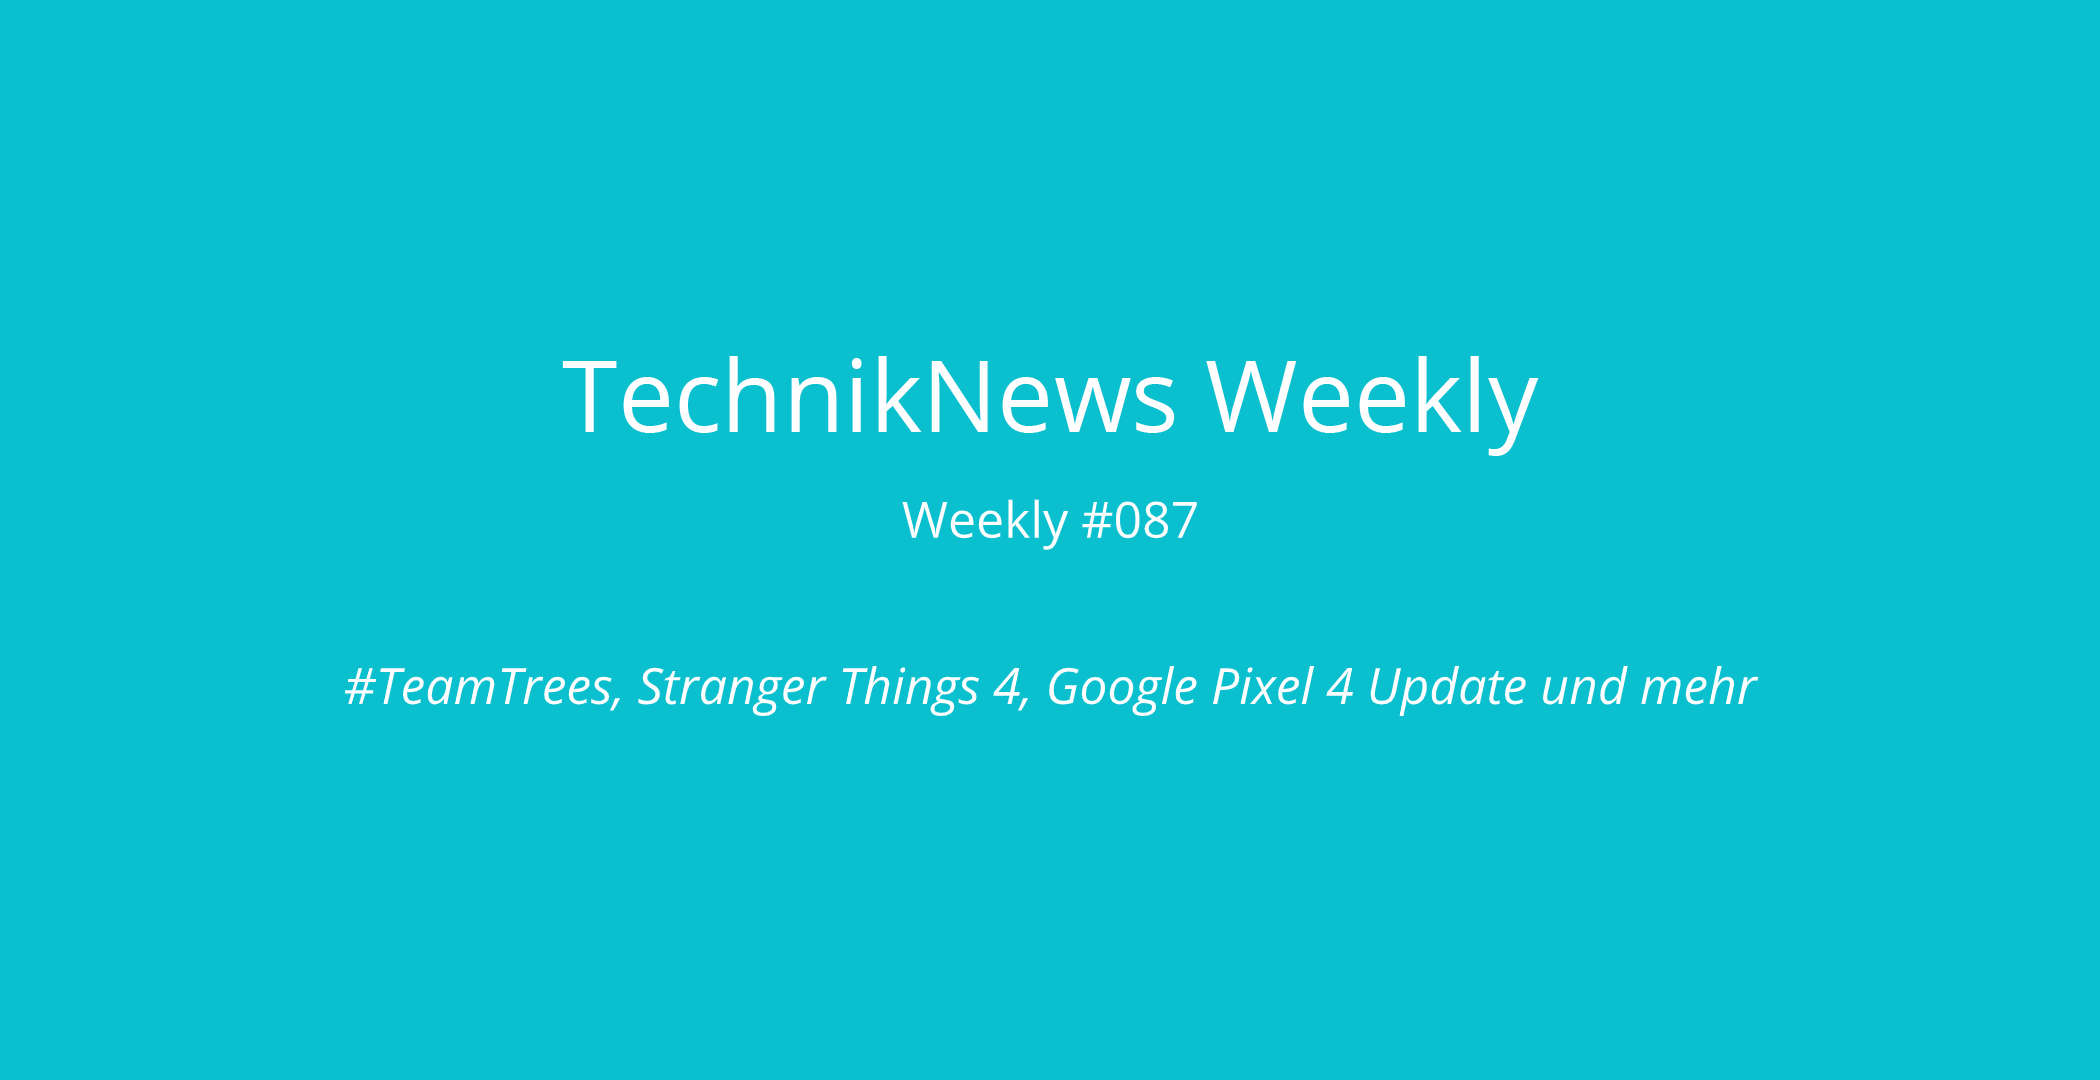 TechnikNews Weekly # 087